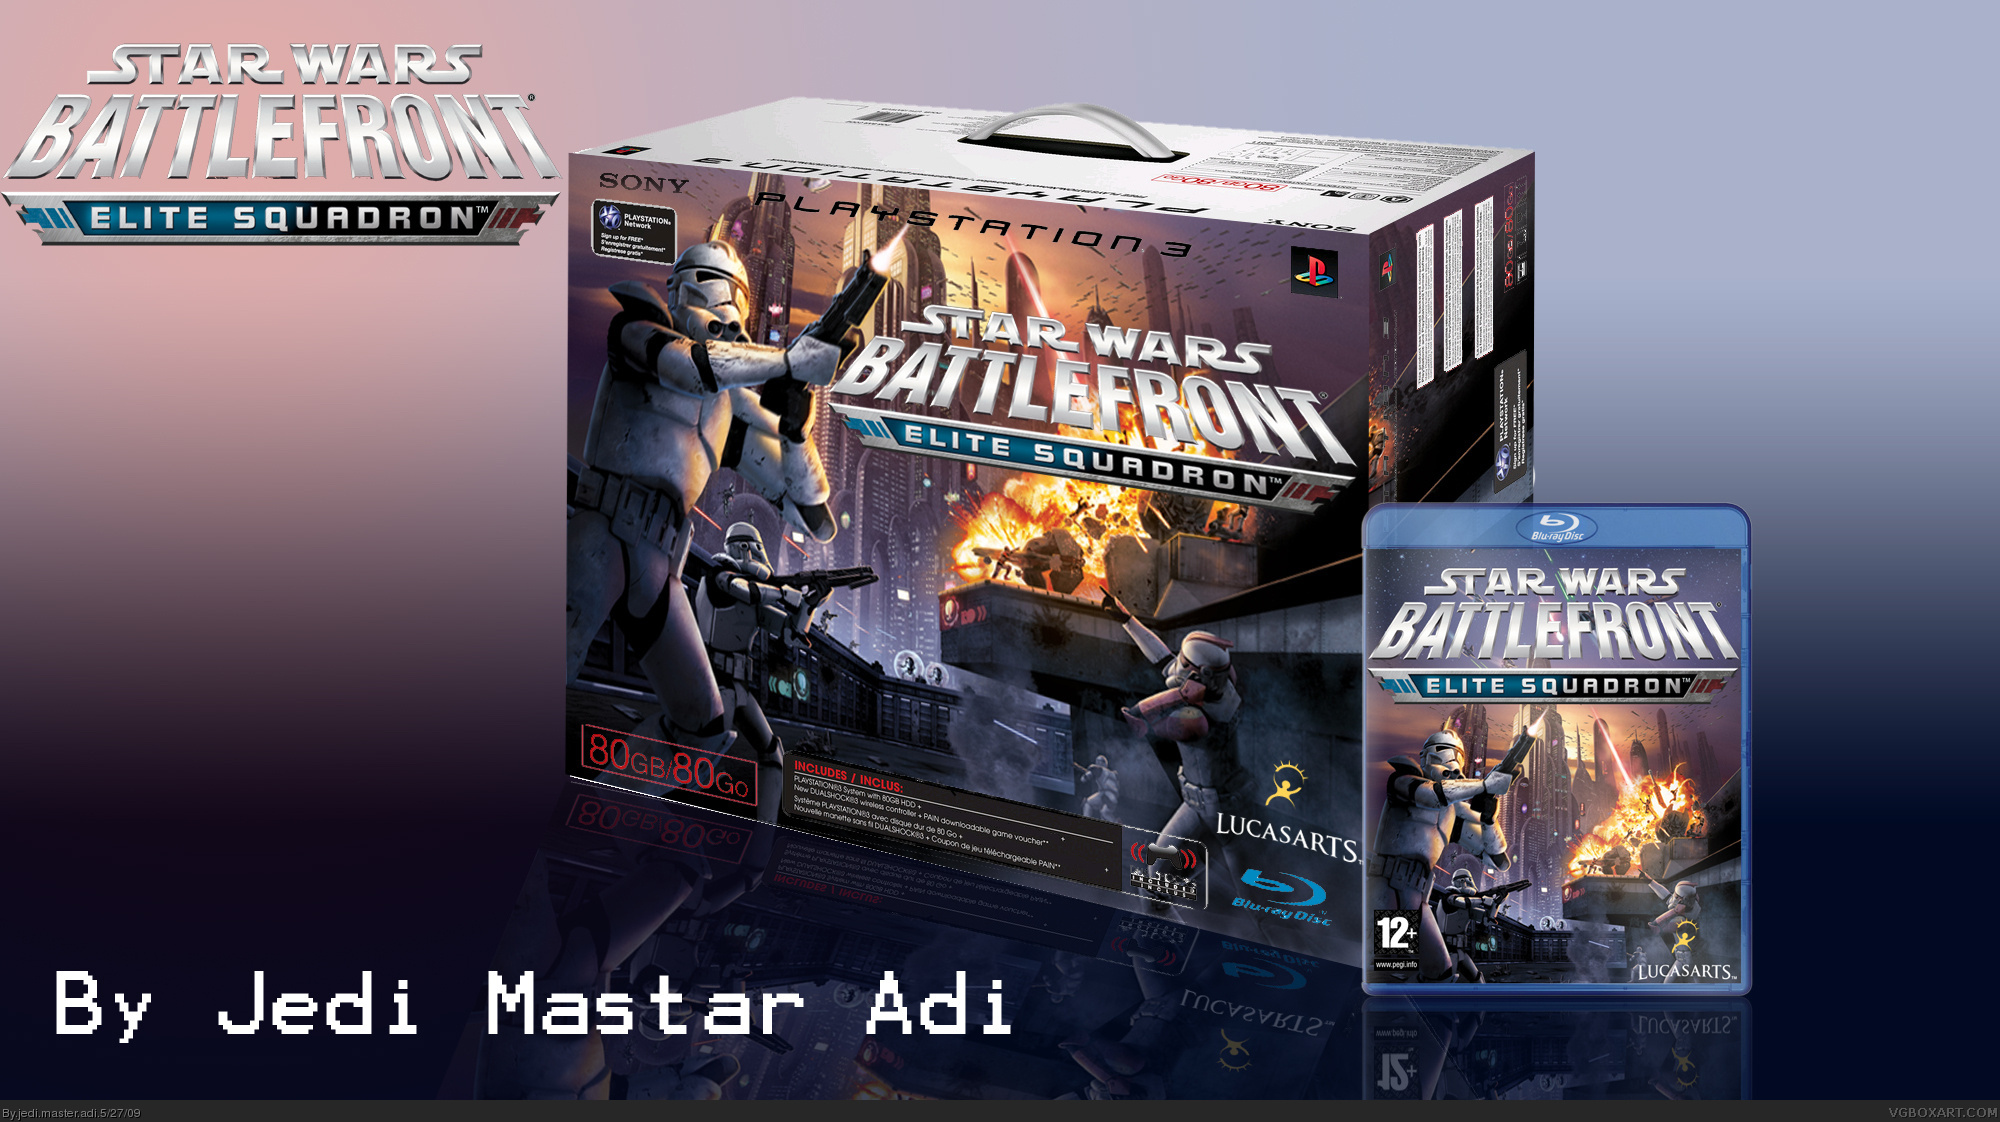 Star Wars Battlefront Elite Squadron box cover